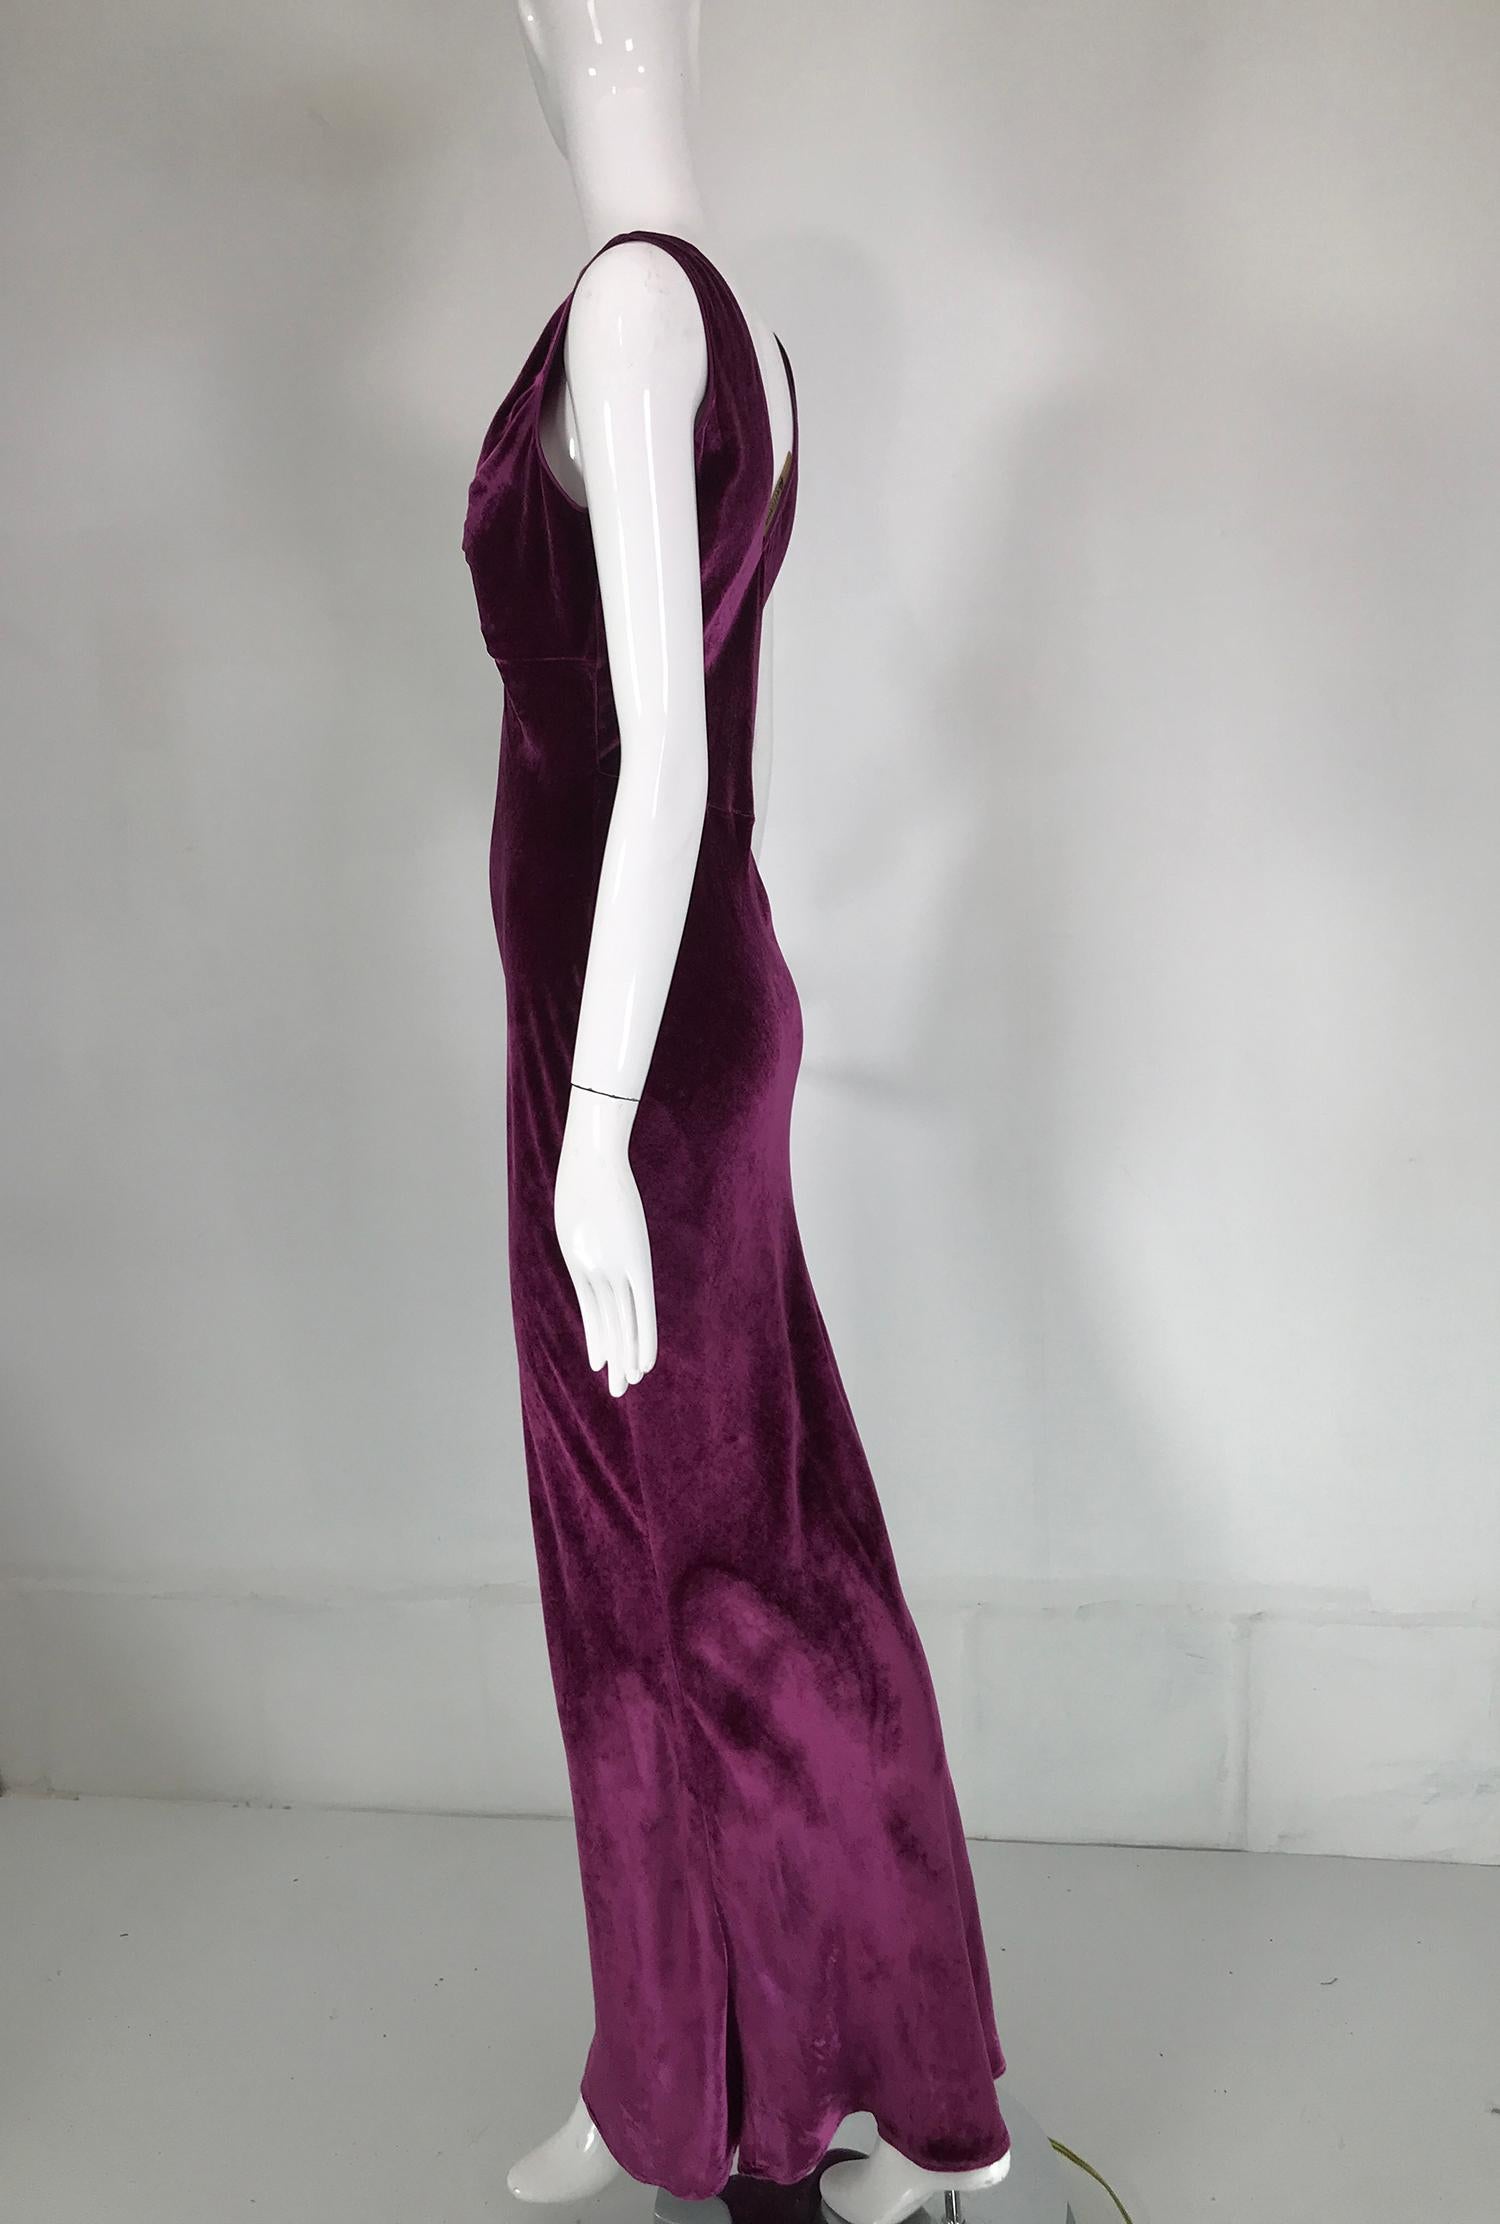 Women's John Galliano 1930s Inspired Bias Cut Wine Velvet Evening Dress Early 2000's